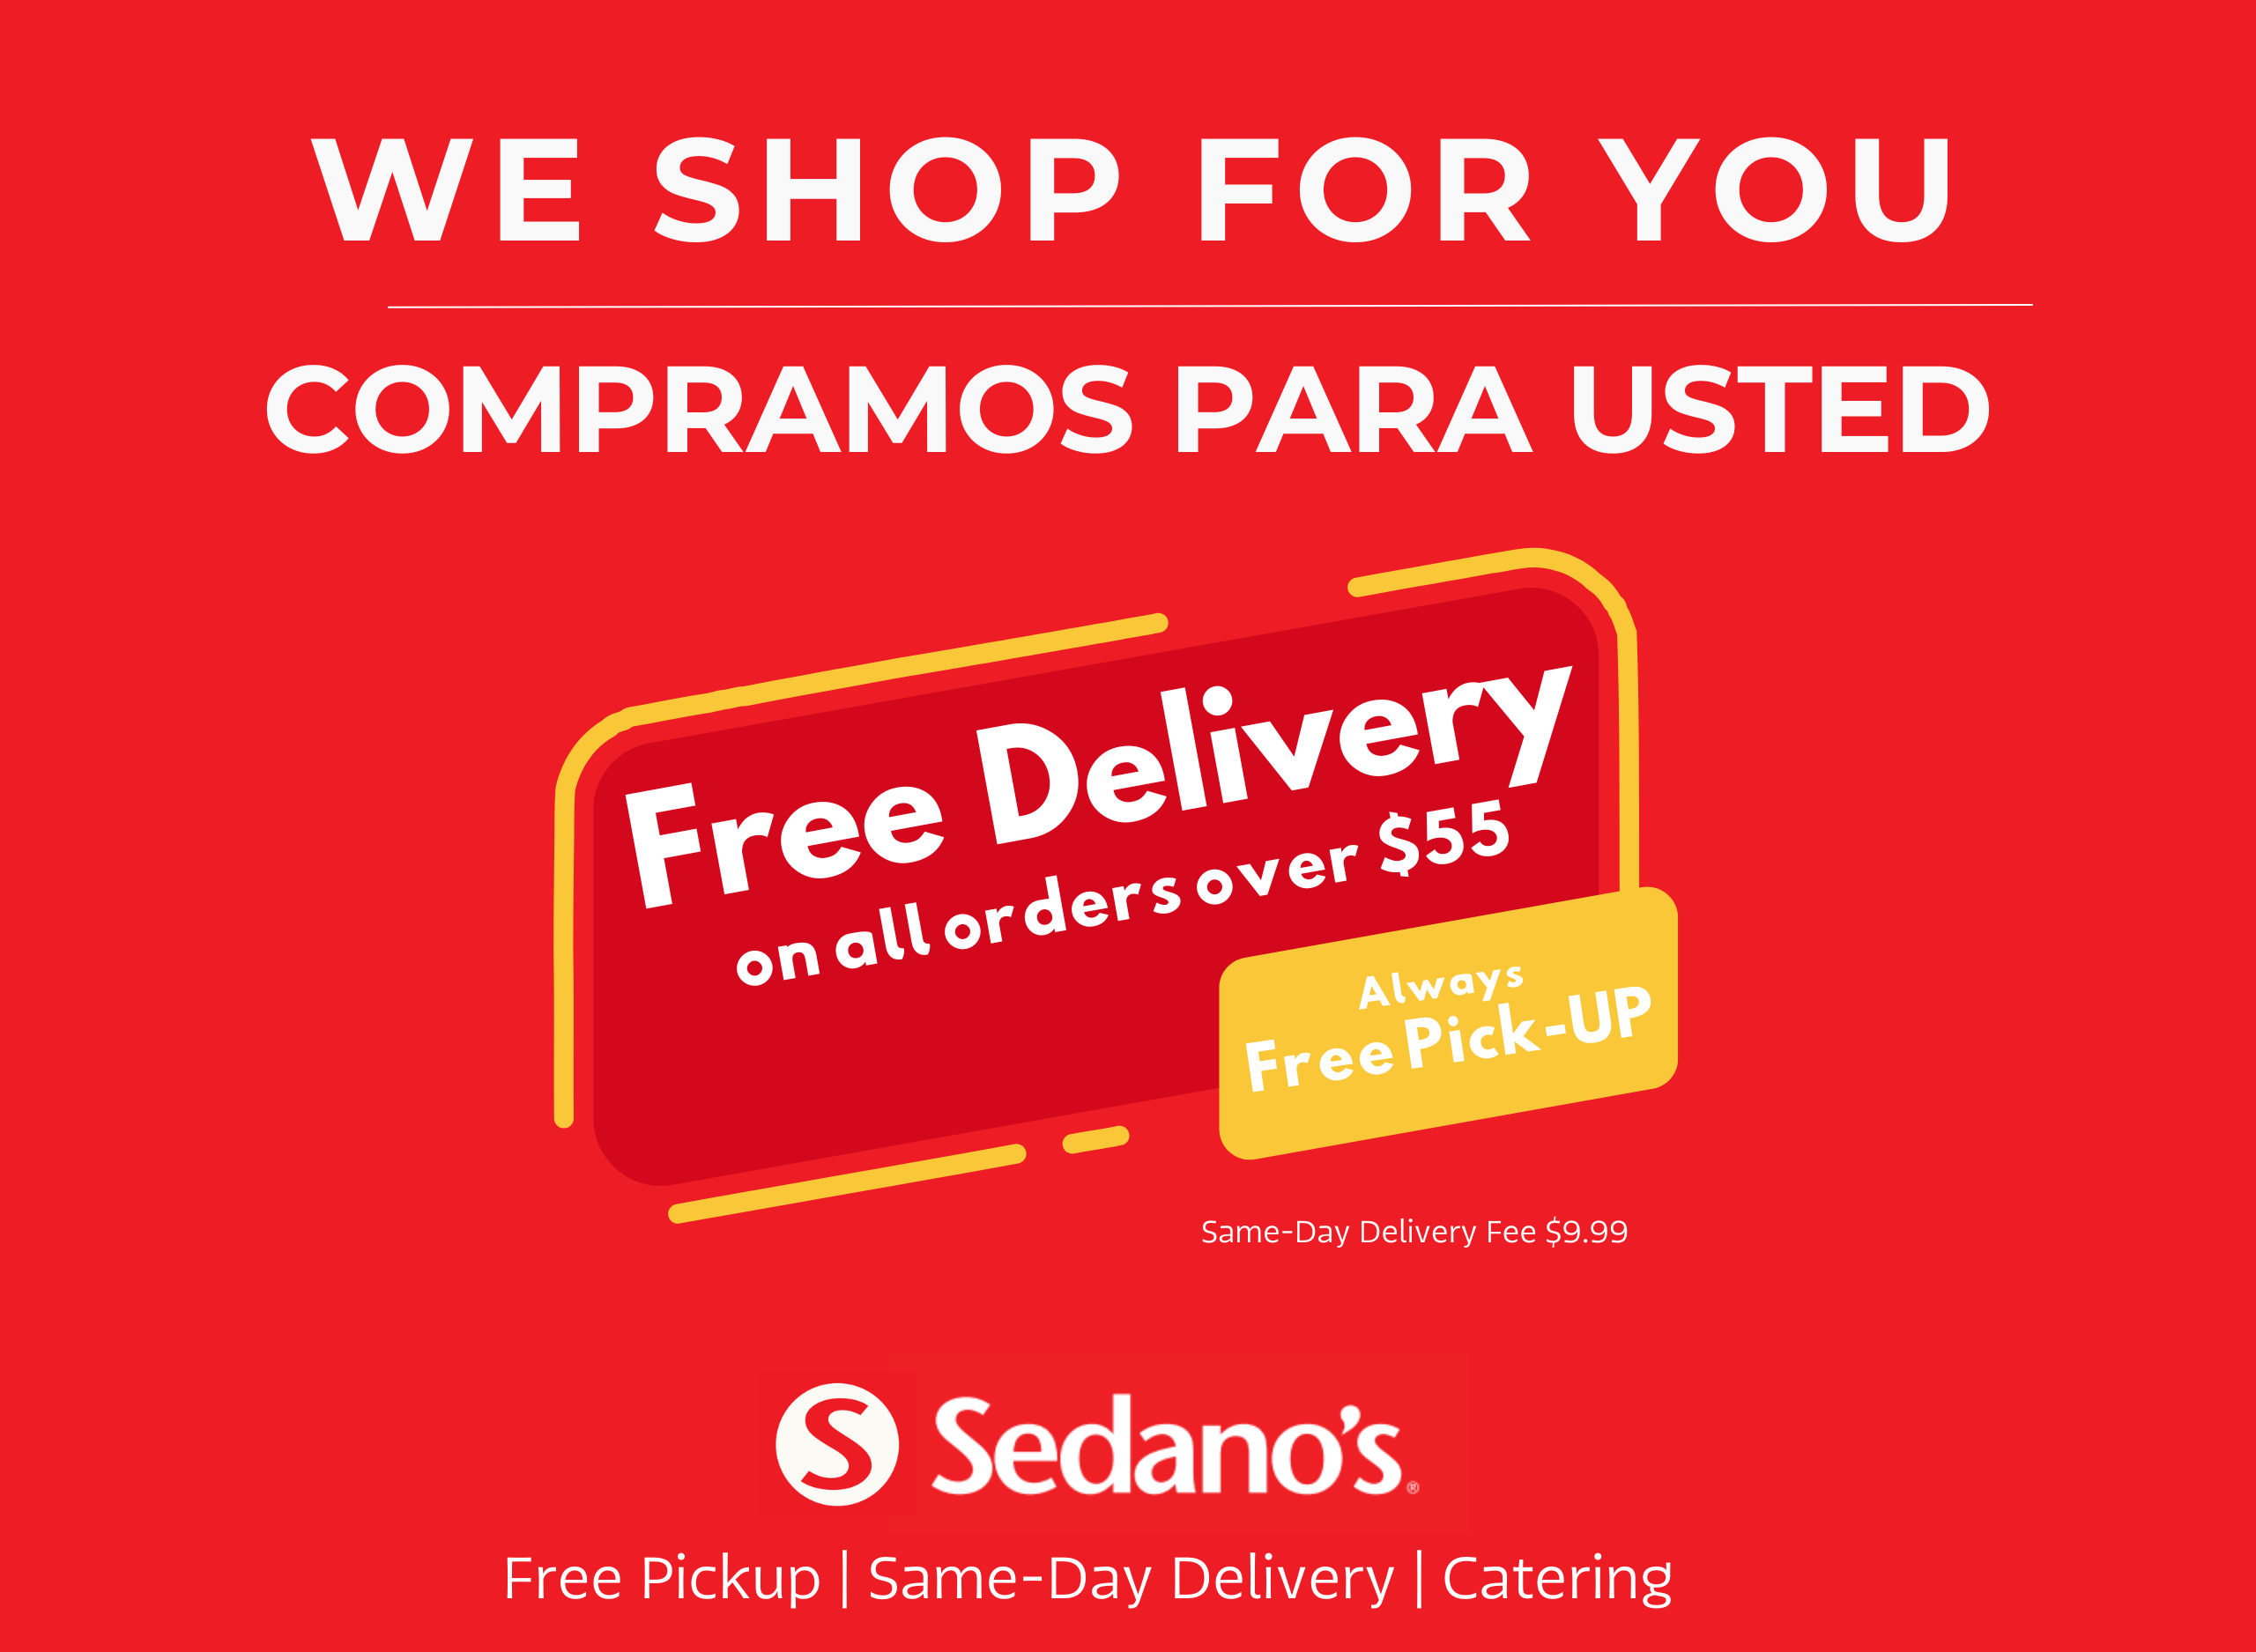 Sedanos.com | Pick Up and Same Delivery | We Shop For You